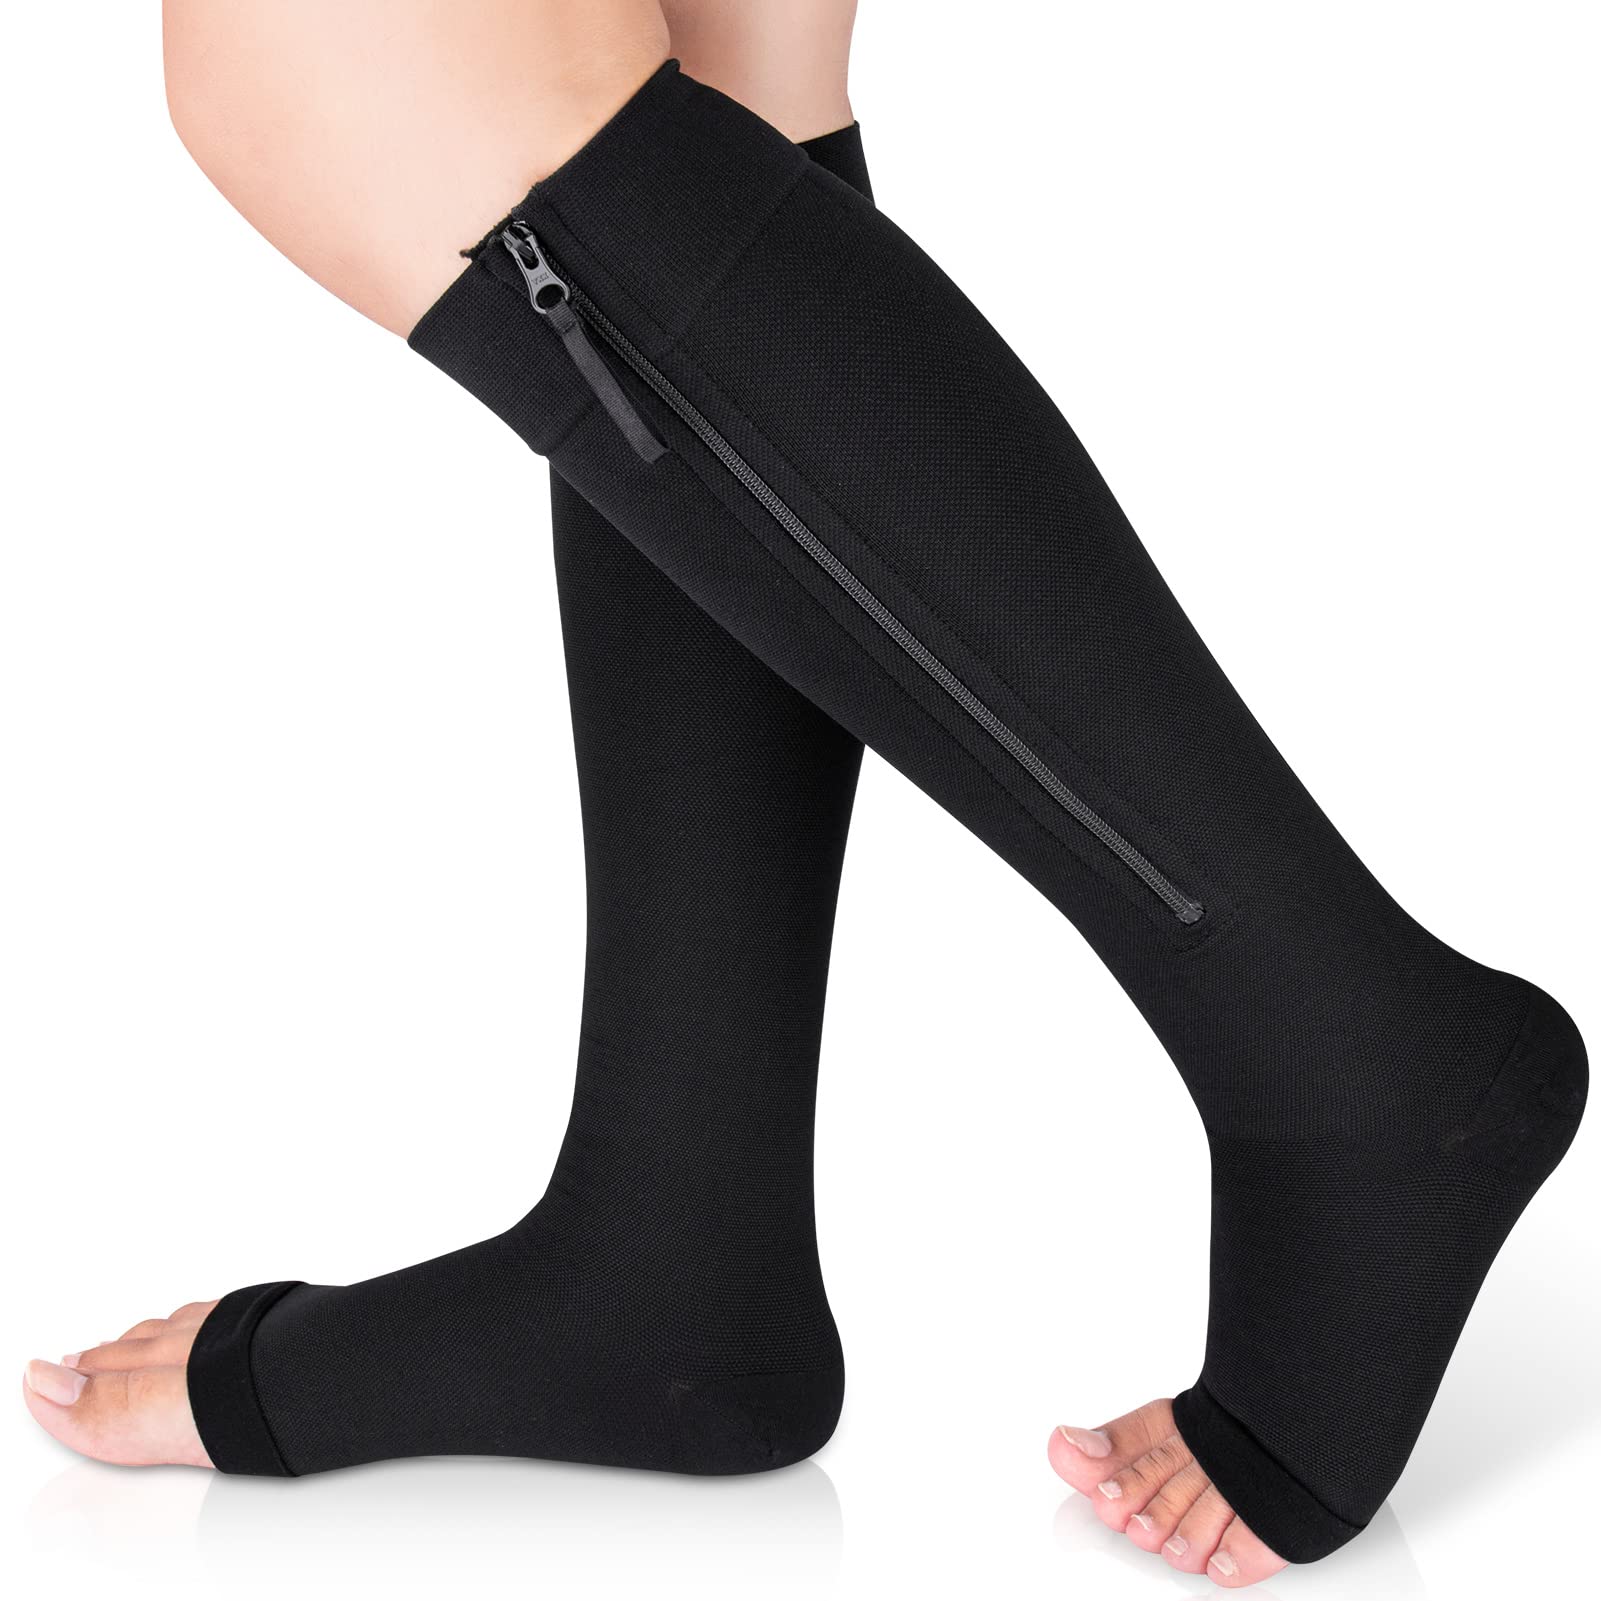 Ailaka Medical Compression Socks with Zipper, Knee High 15-20 mmHg  Compression Socks for Women Men